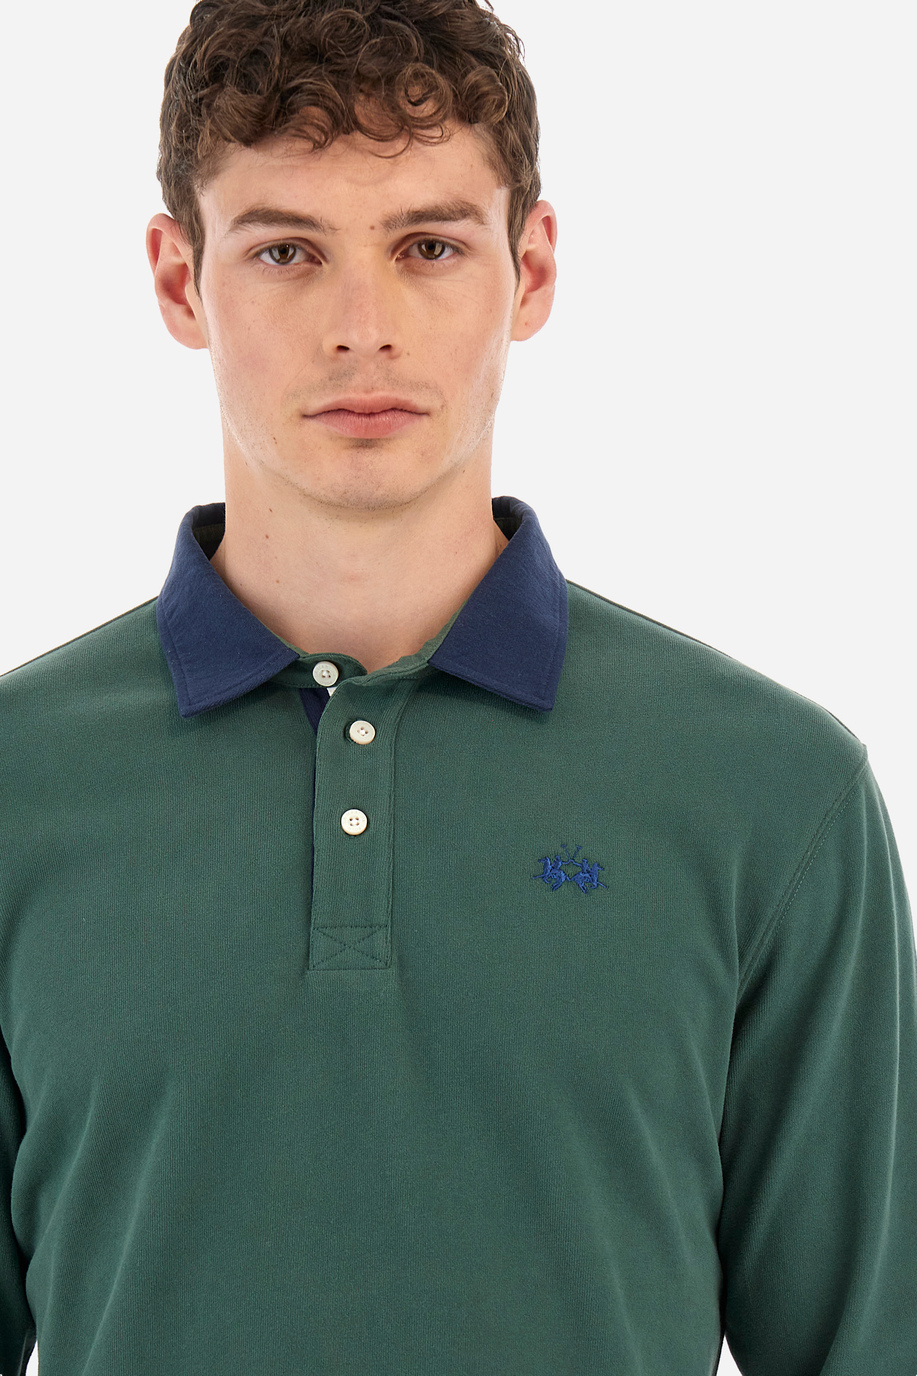 Herren -Poloshirt regular fit - Waller - Klassische Basics | La Martina - Official Online Shop